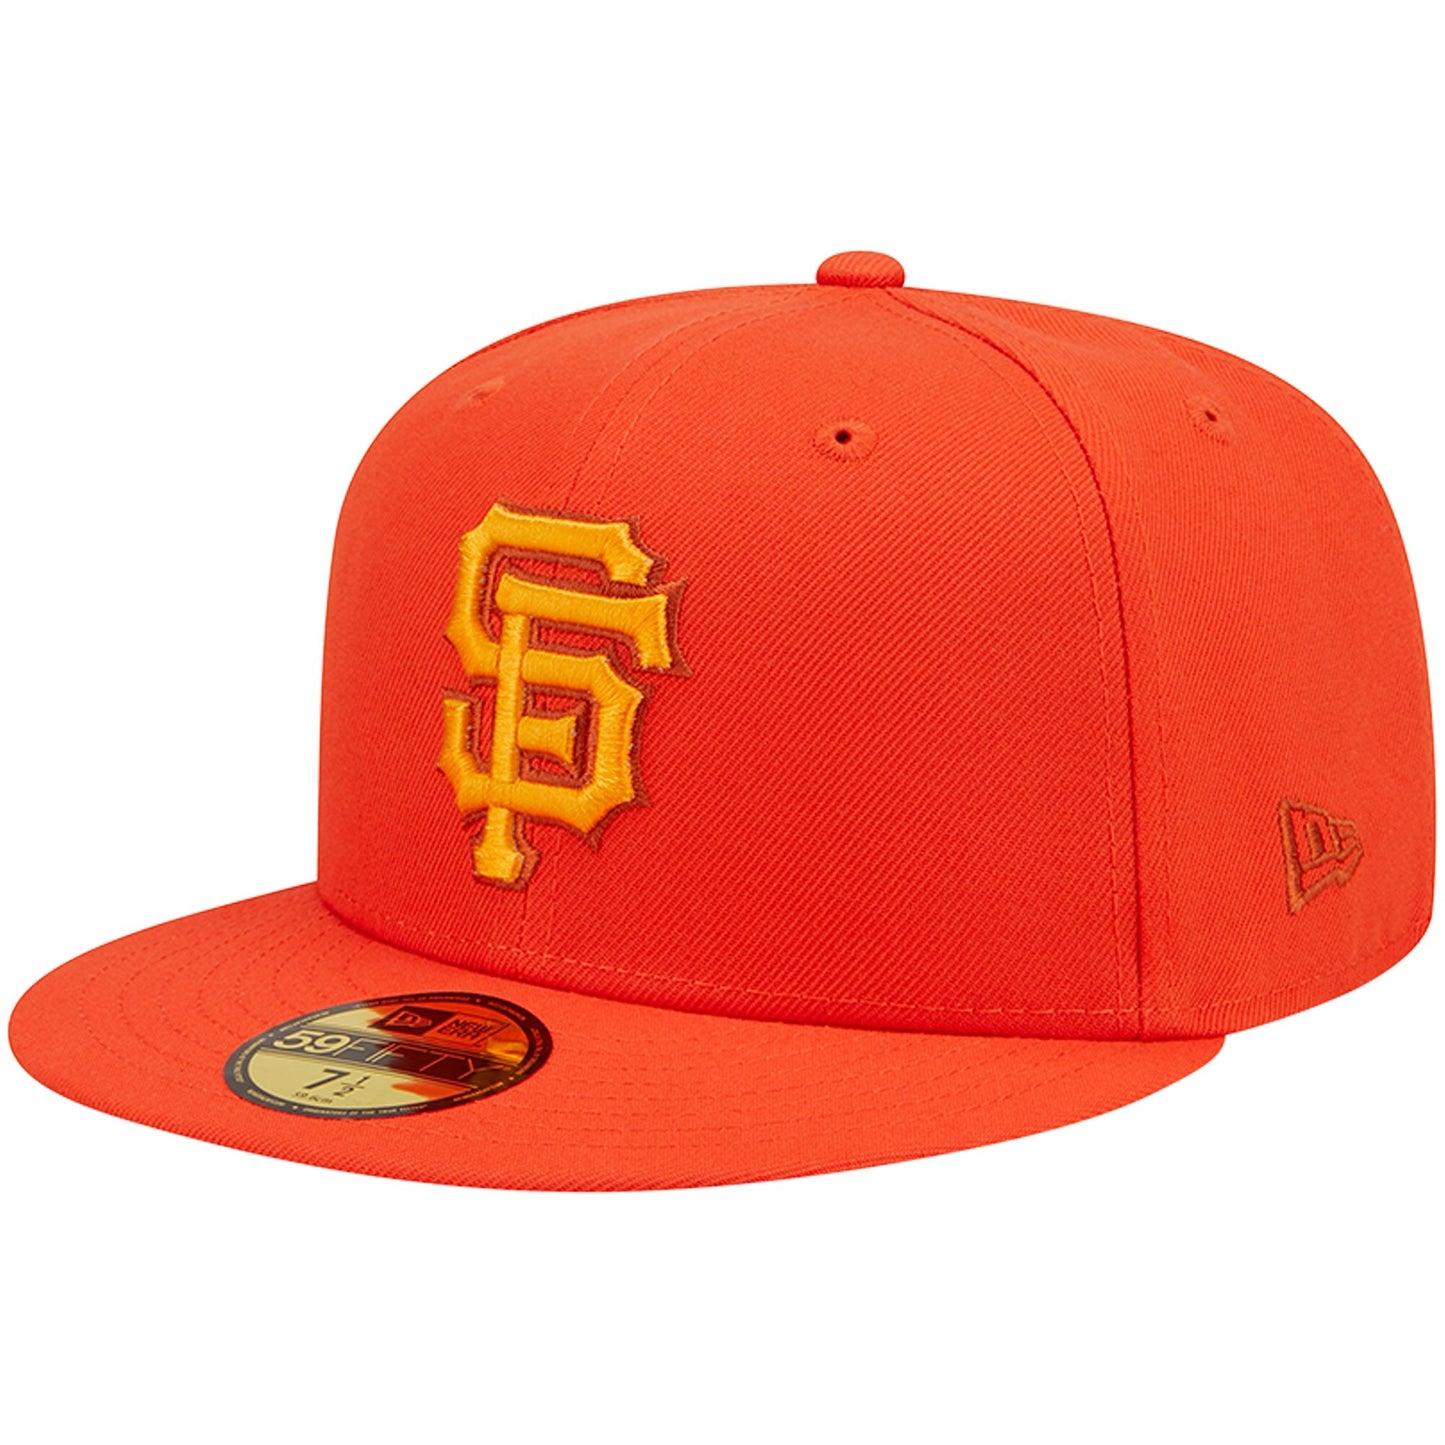 San Francisco Giants New Era Monochrome Camo 59FIFTY Fitted Hat - Orange